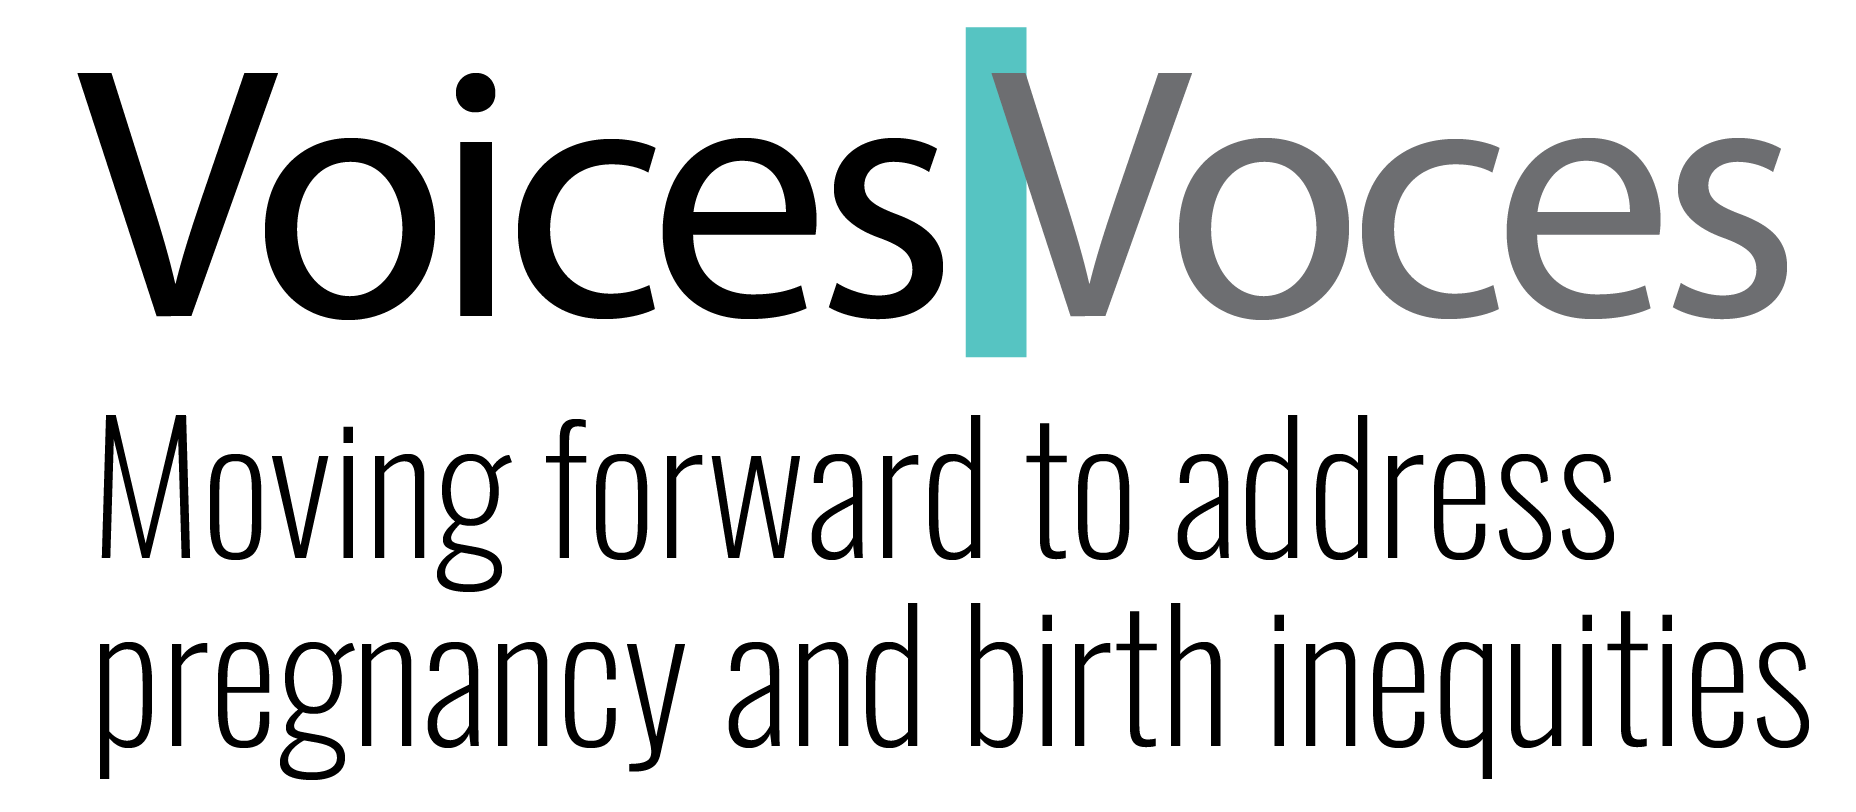 Voices/Voces english logo.